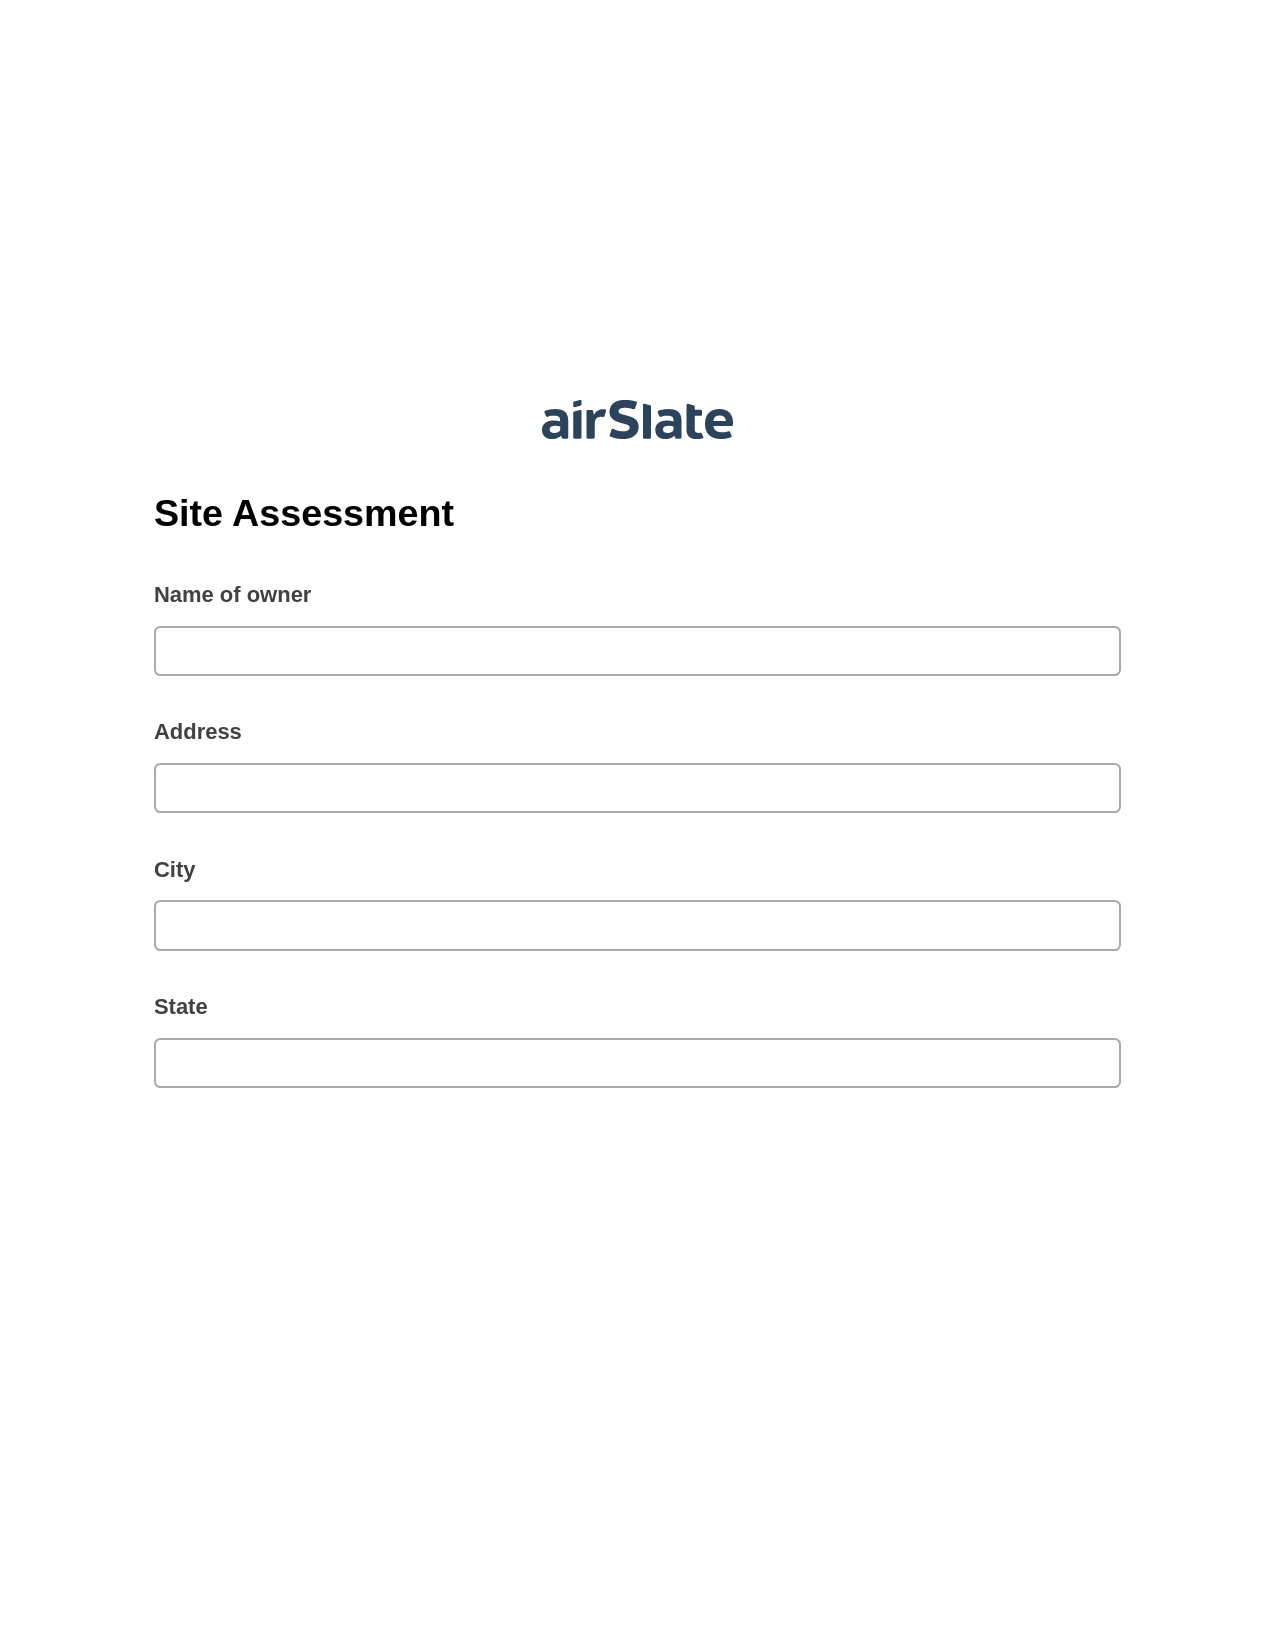 Site Assessment Pre-fill Slate from MS Dynamics 365 Records Bot, Invoke Salesforce Process Bot, Box Bot